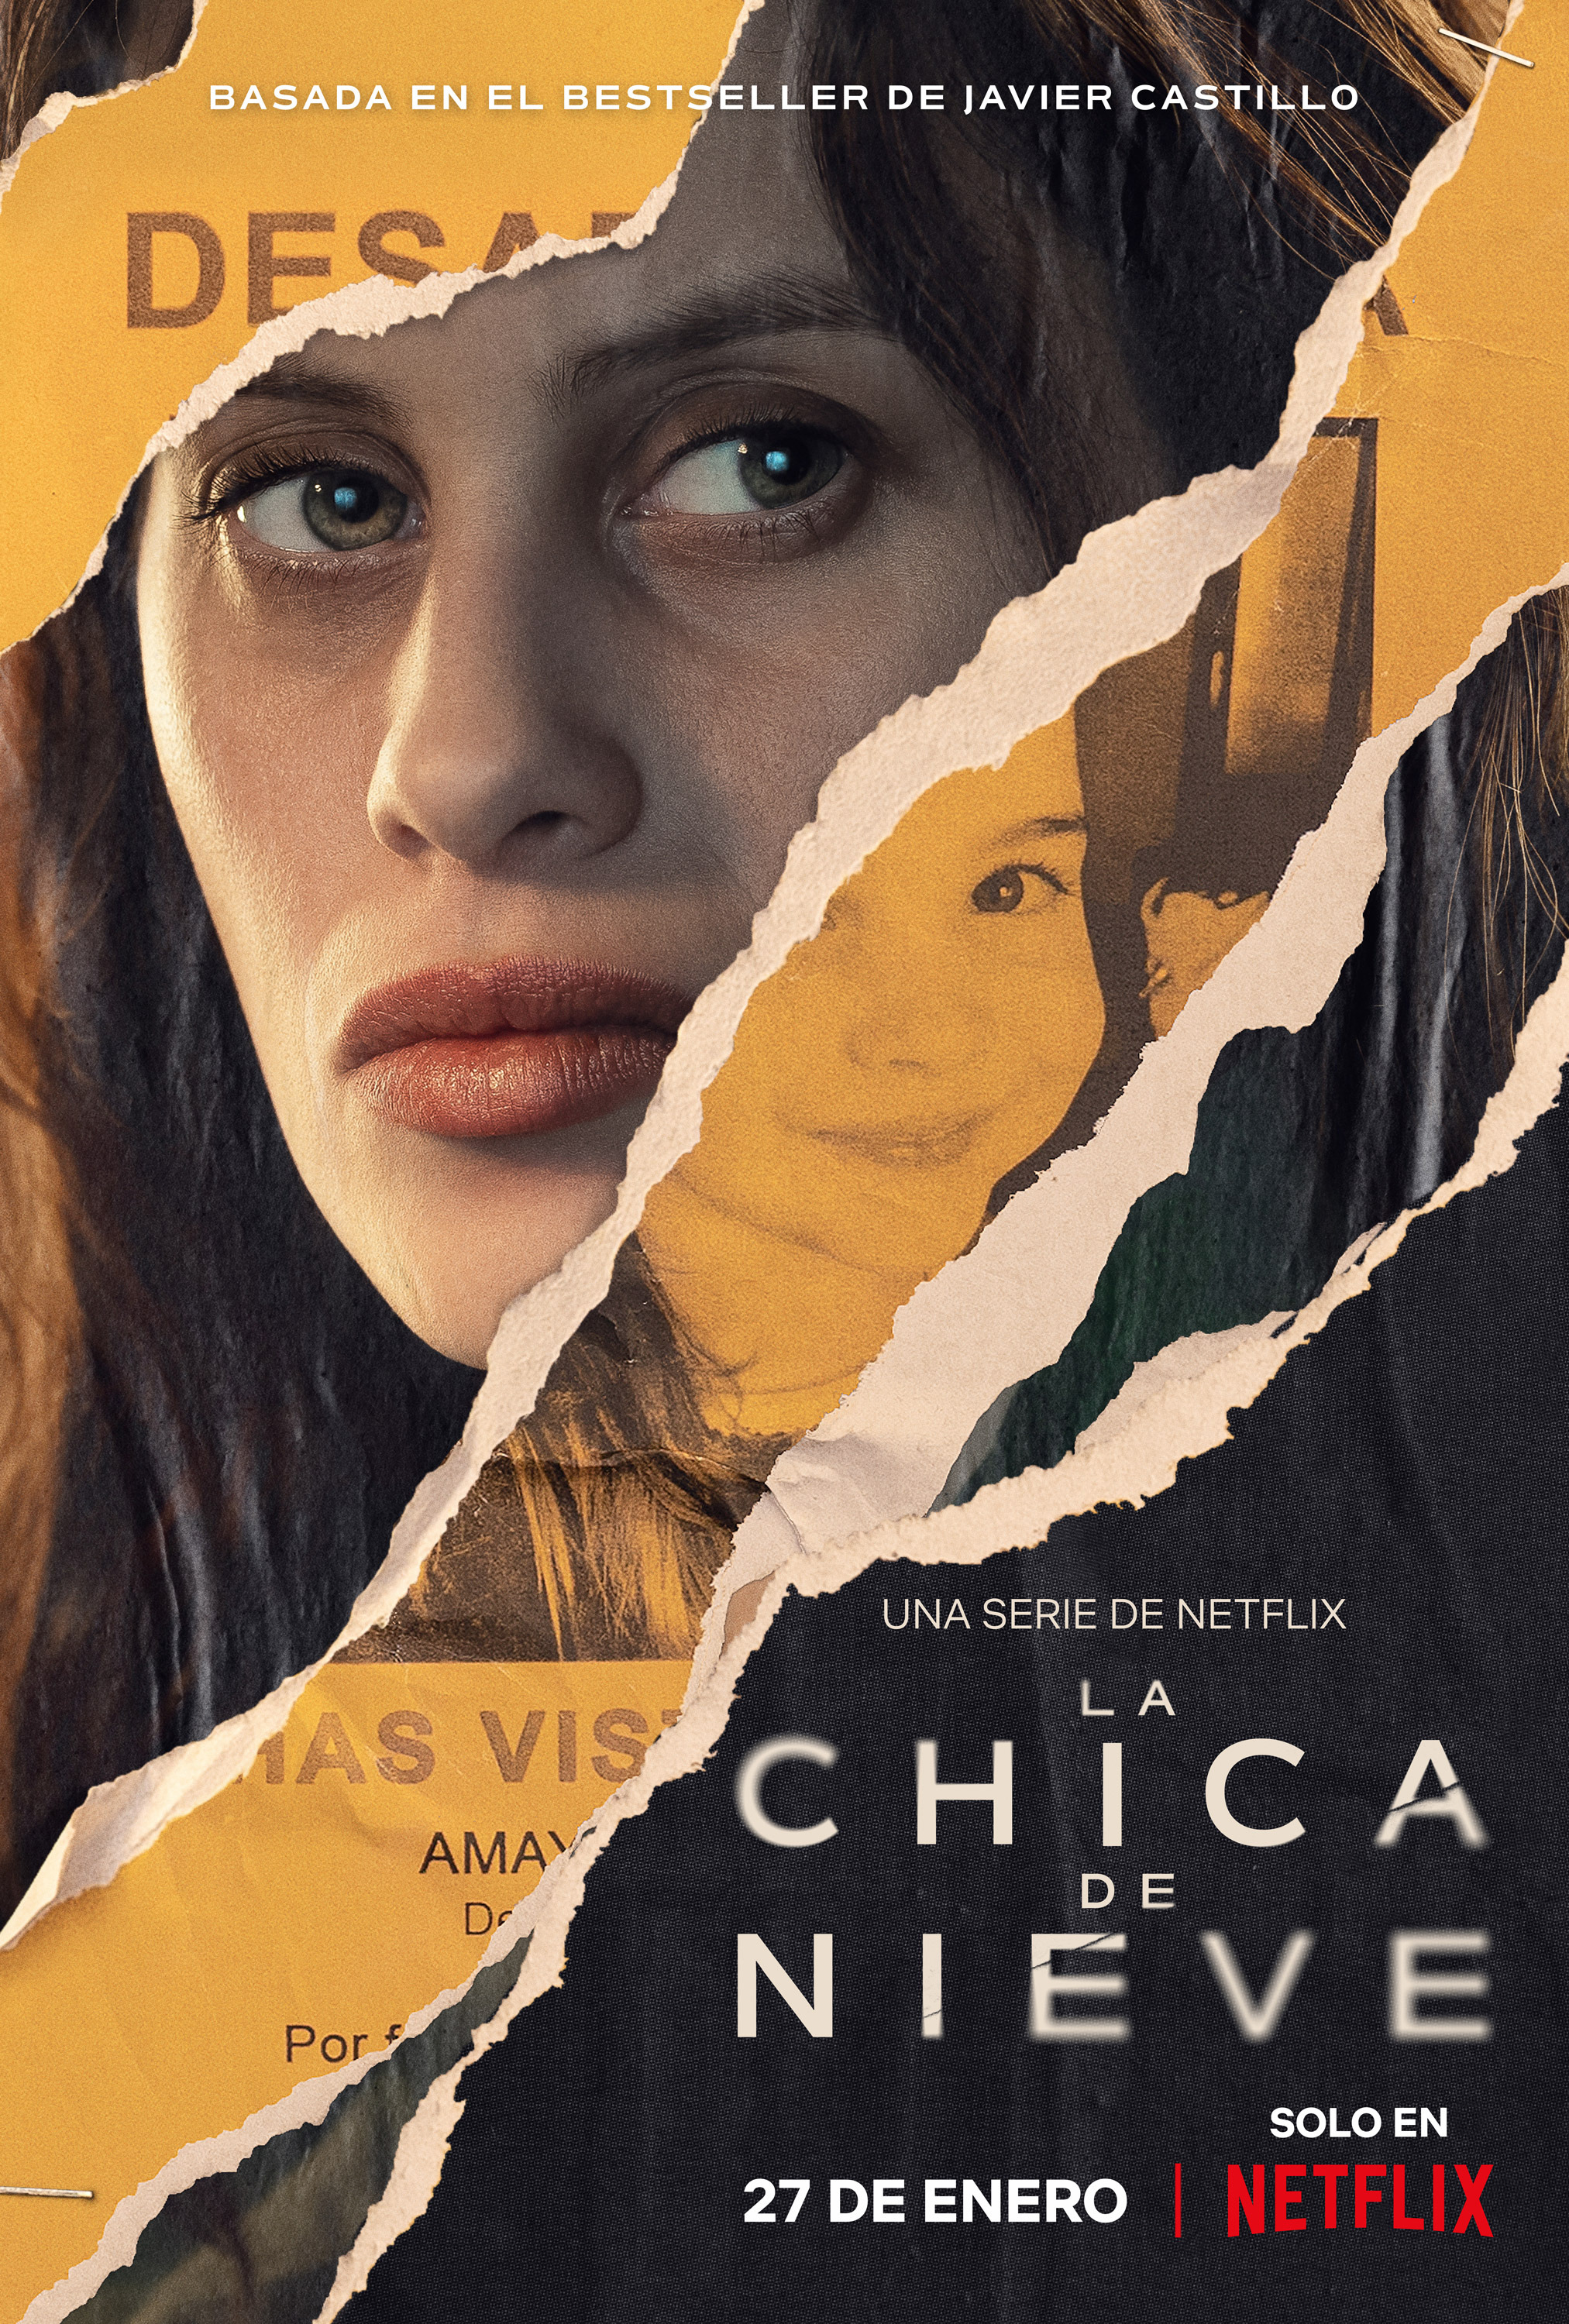 Mega Sized TV Poster Image for La chica de nieve (#3 of 6)